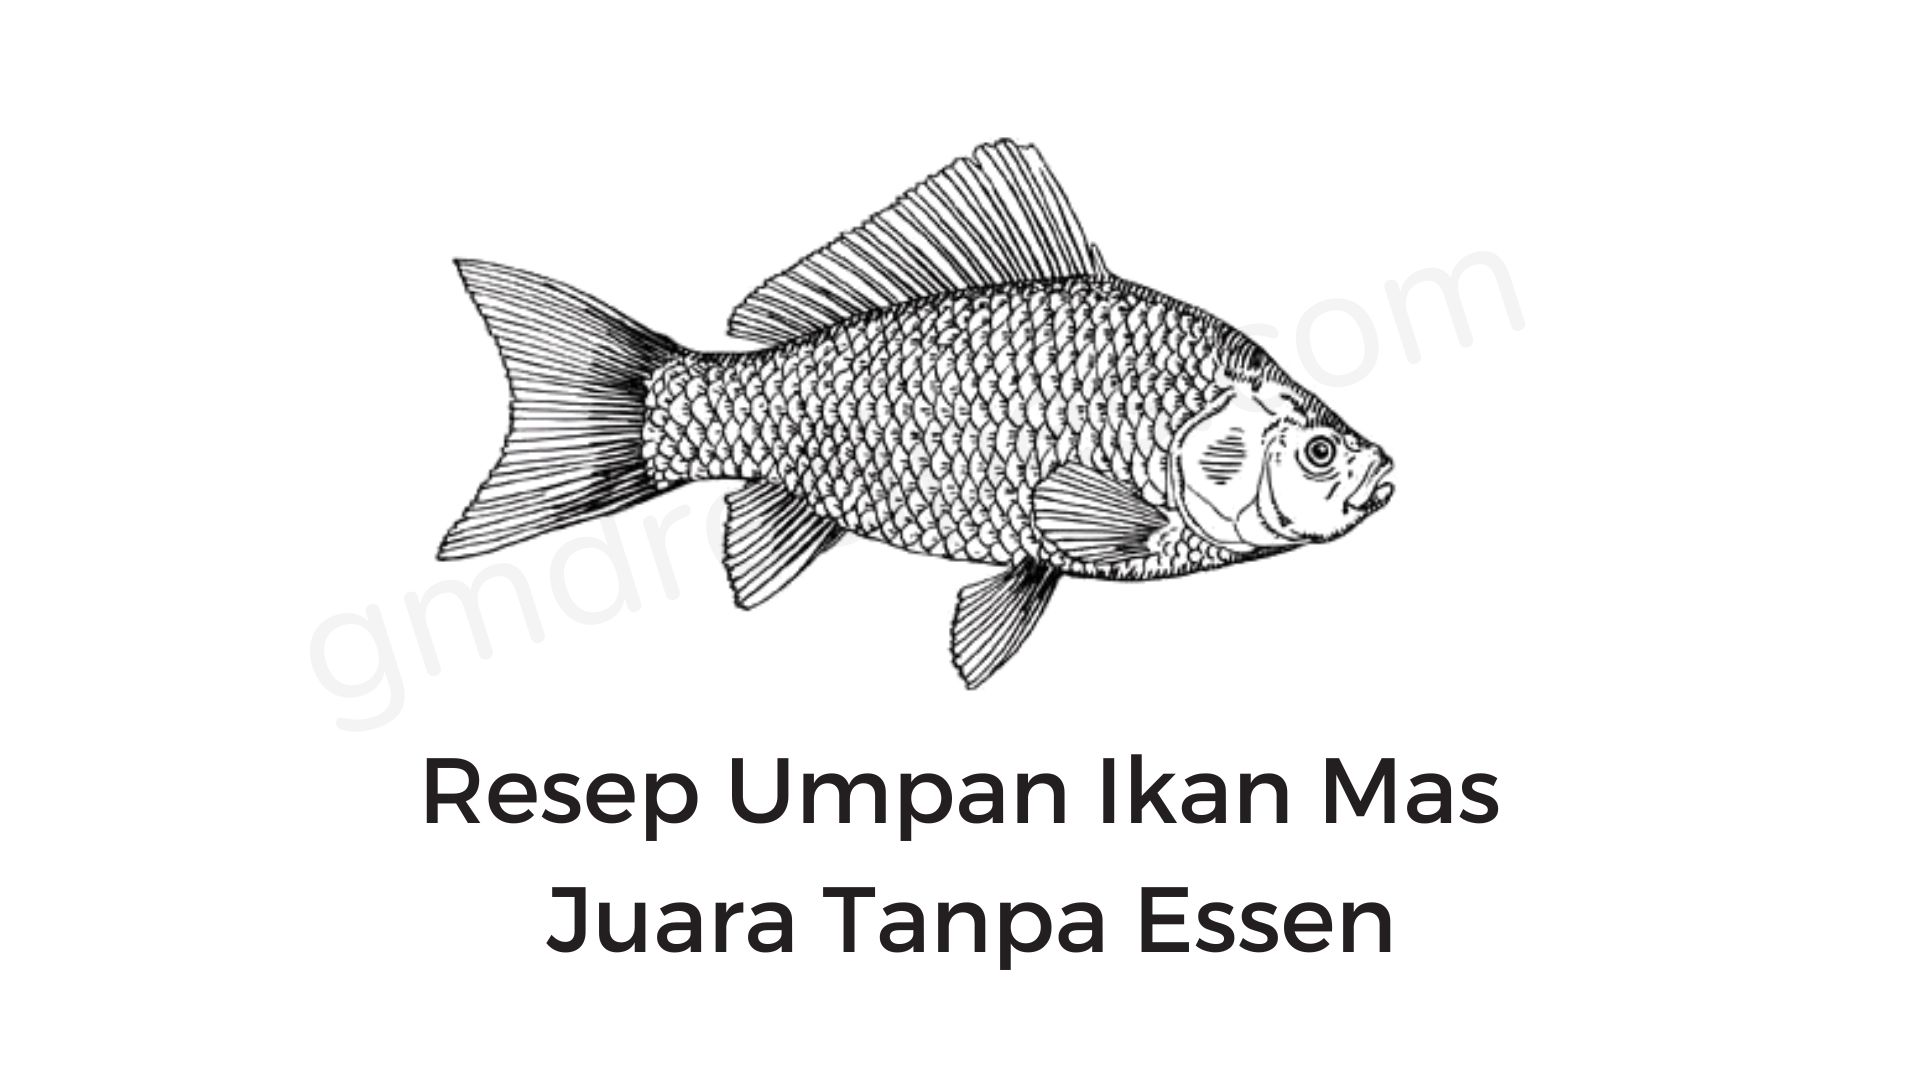 Resep Umpan Ikan Mas Juara Tanpa Essen